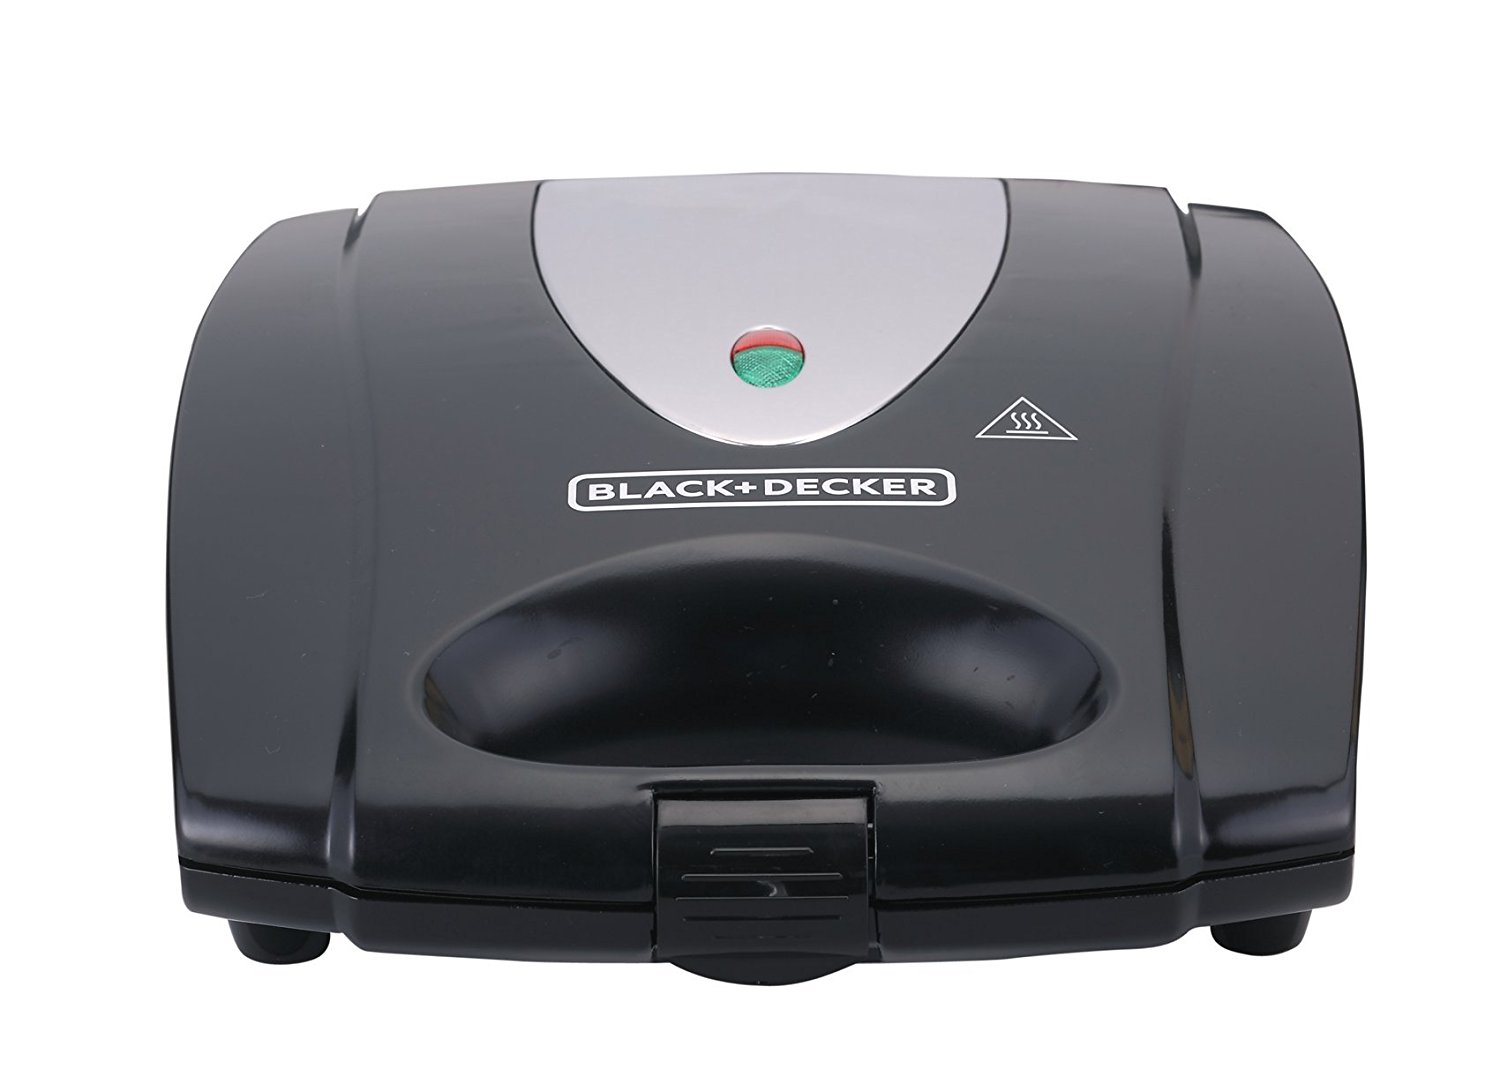 Black + Decker Sandwich Maker, 1400 Watt, Black - TS4080-B5